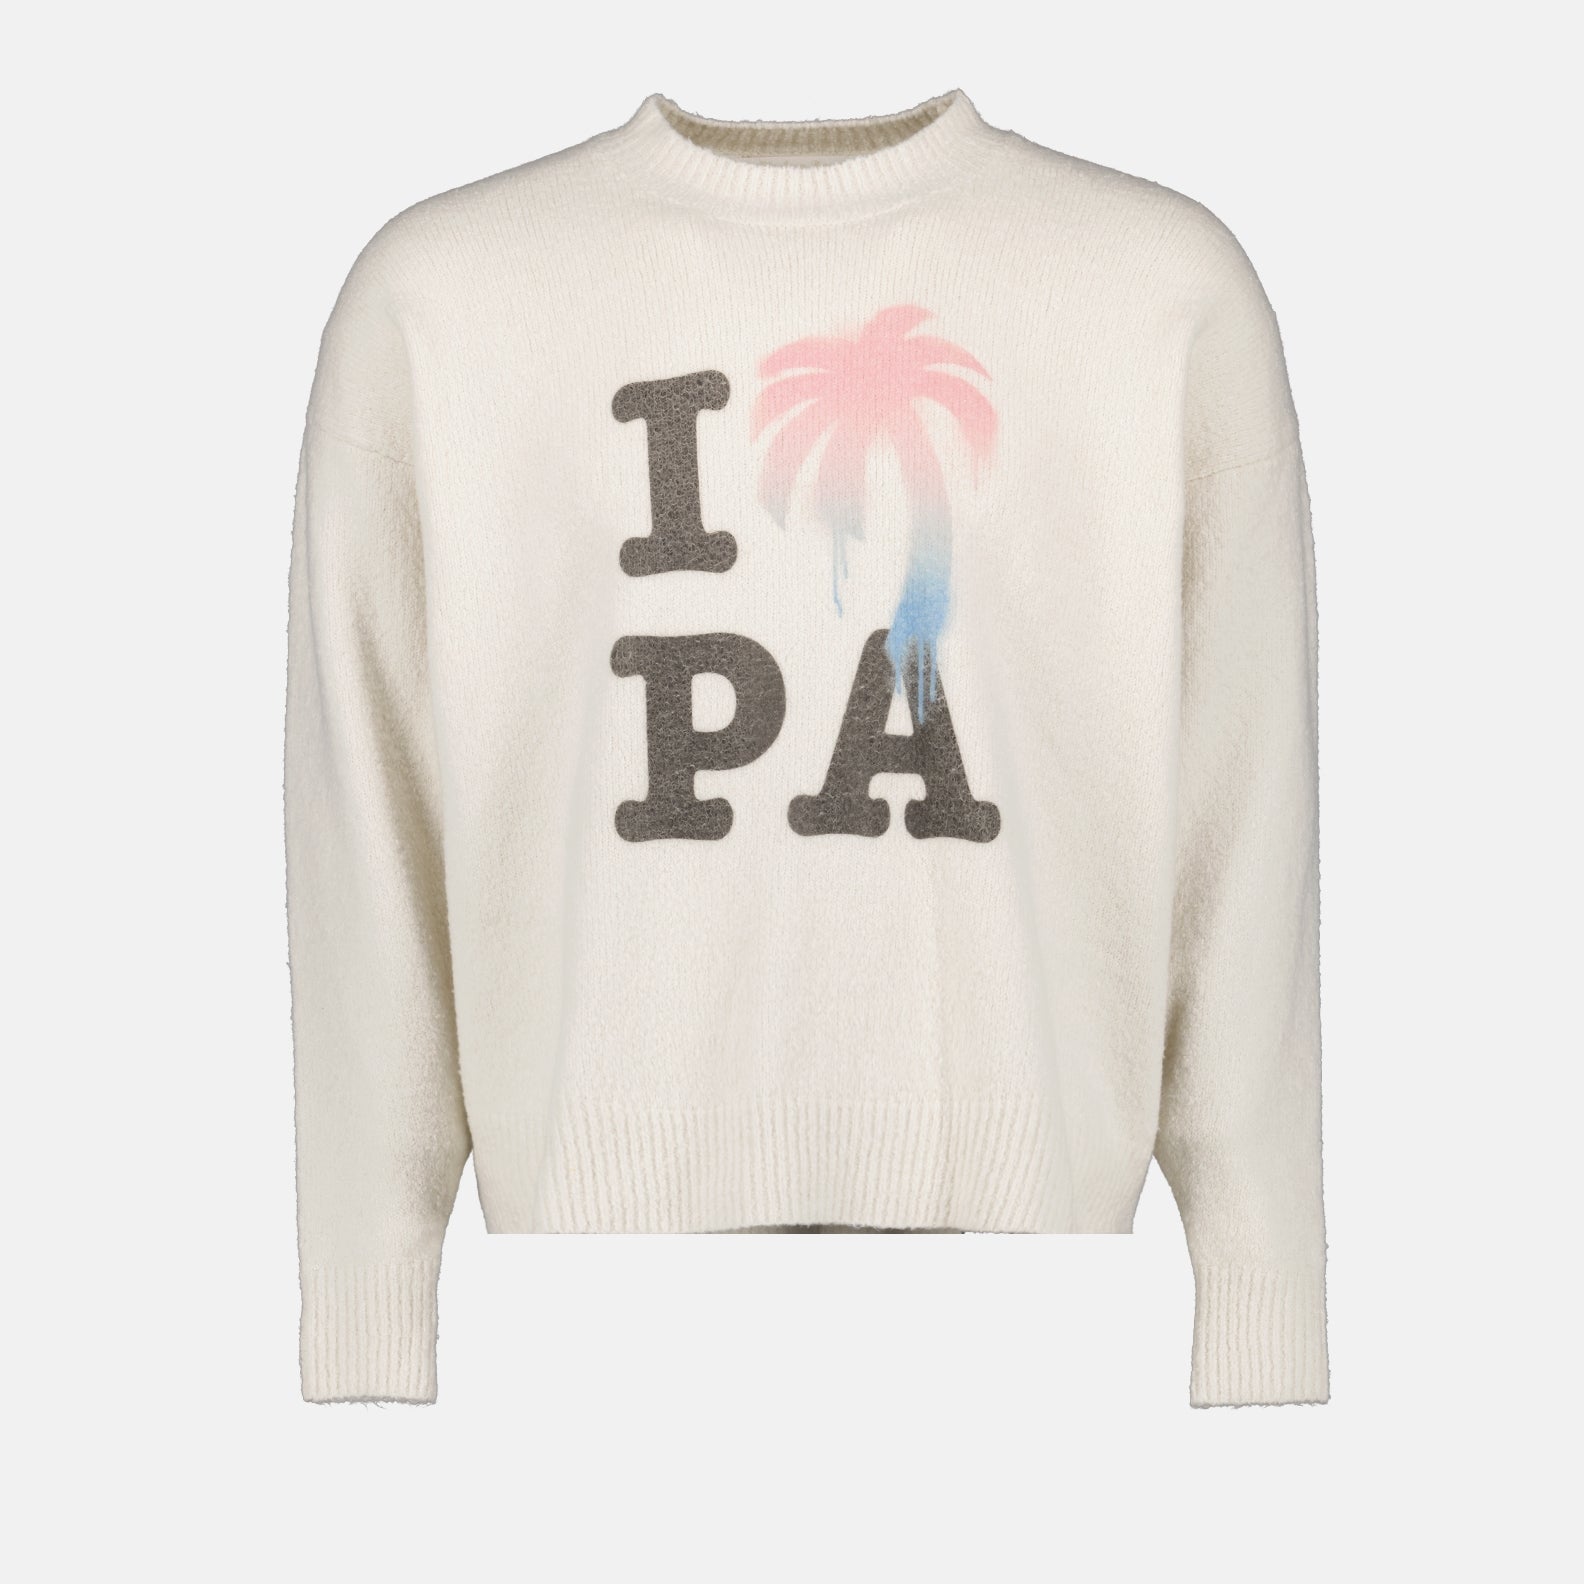 I Love PA Sweater